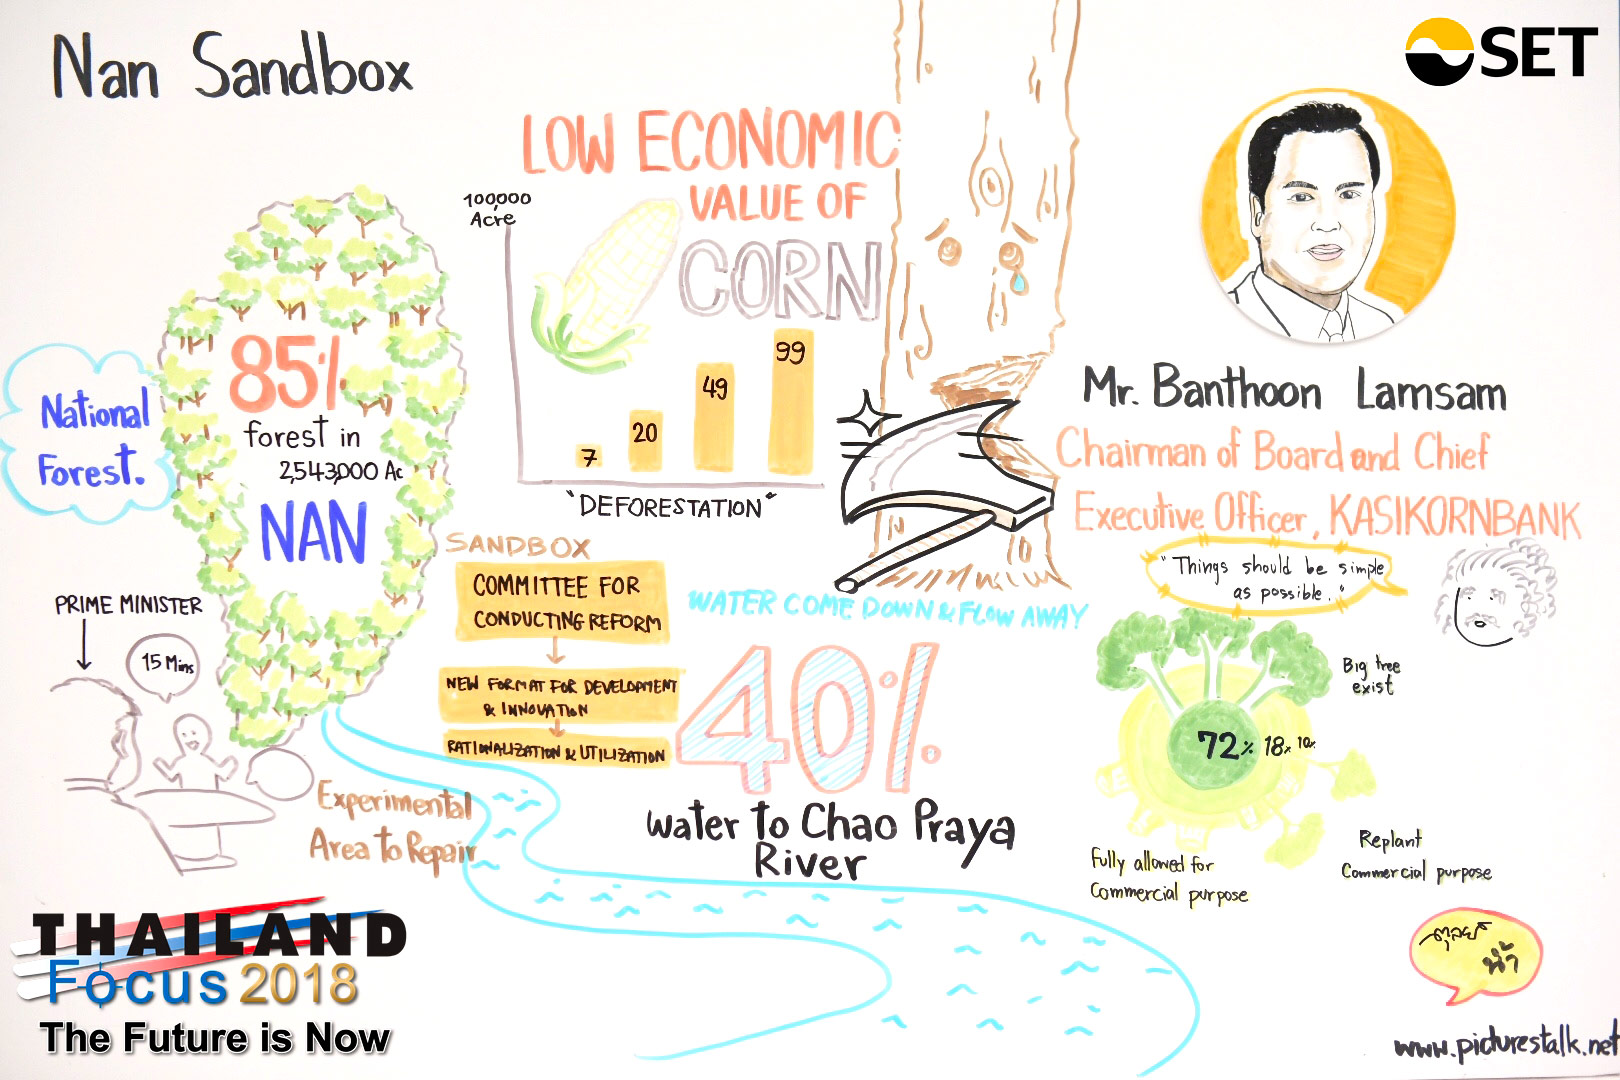 Thailand Focus 2018 - Luncheon Talk: Nan Sandbox - Mr. Banthoon Lamsam